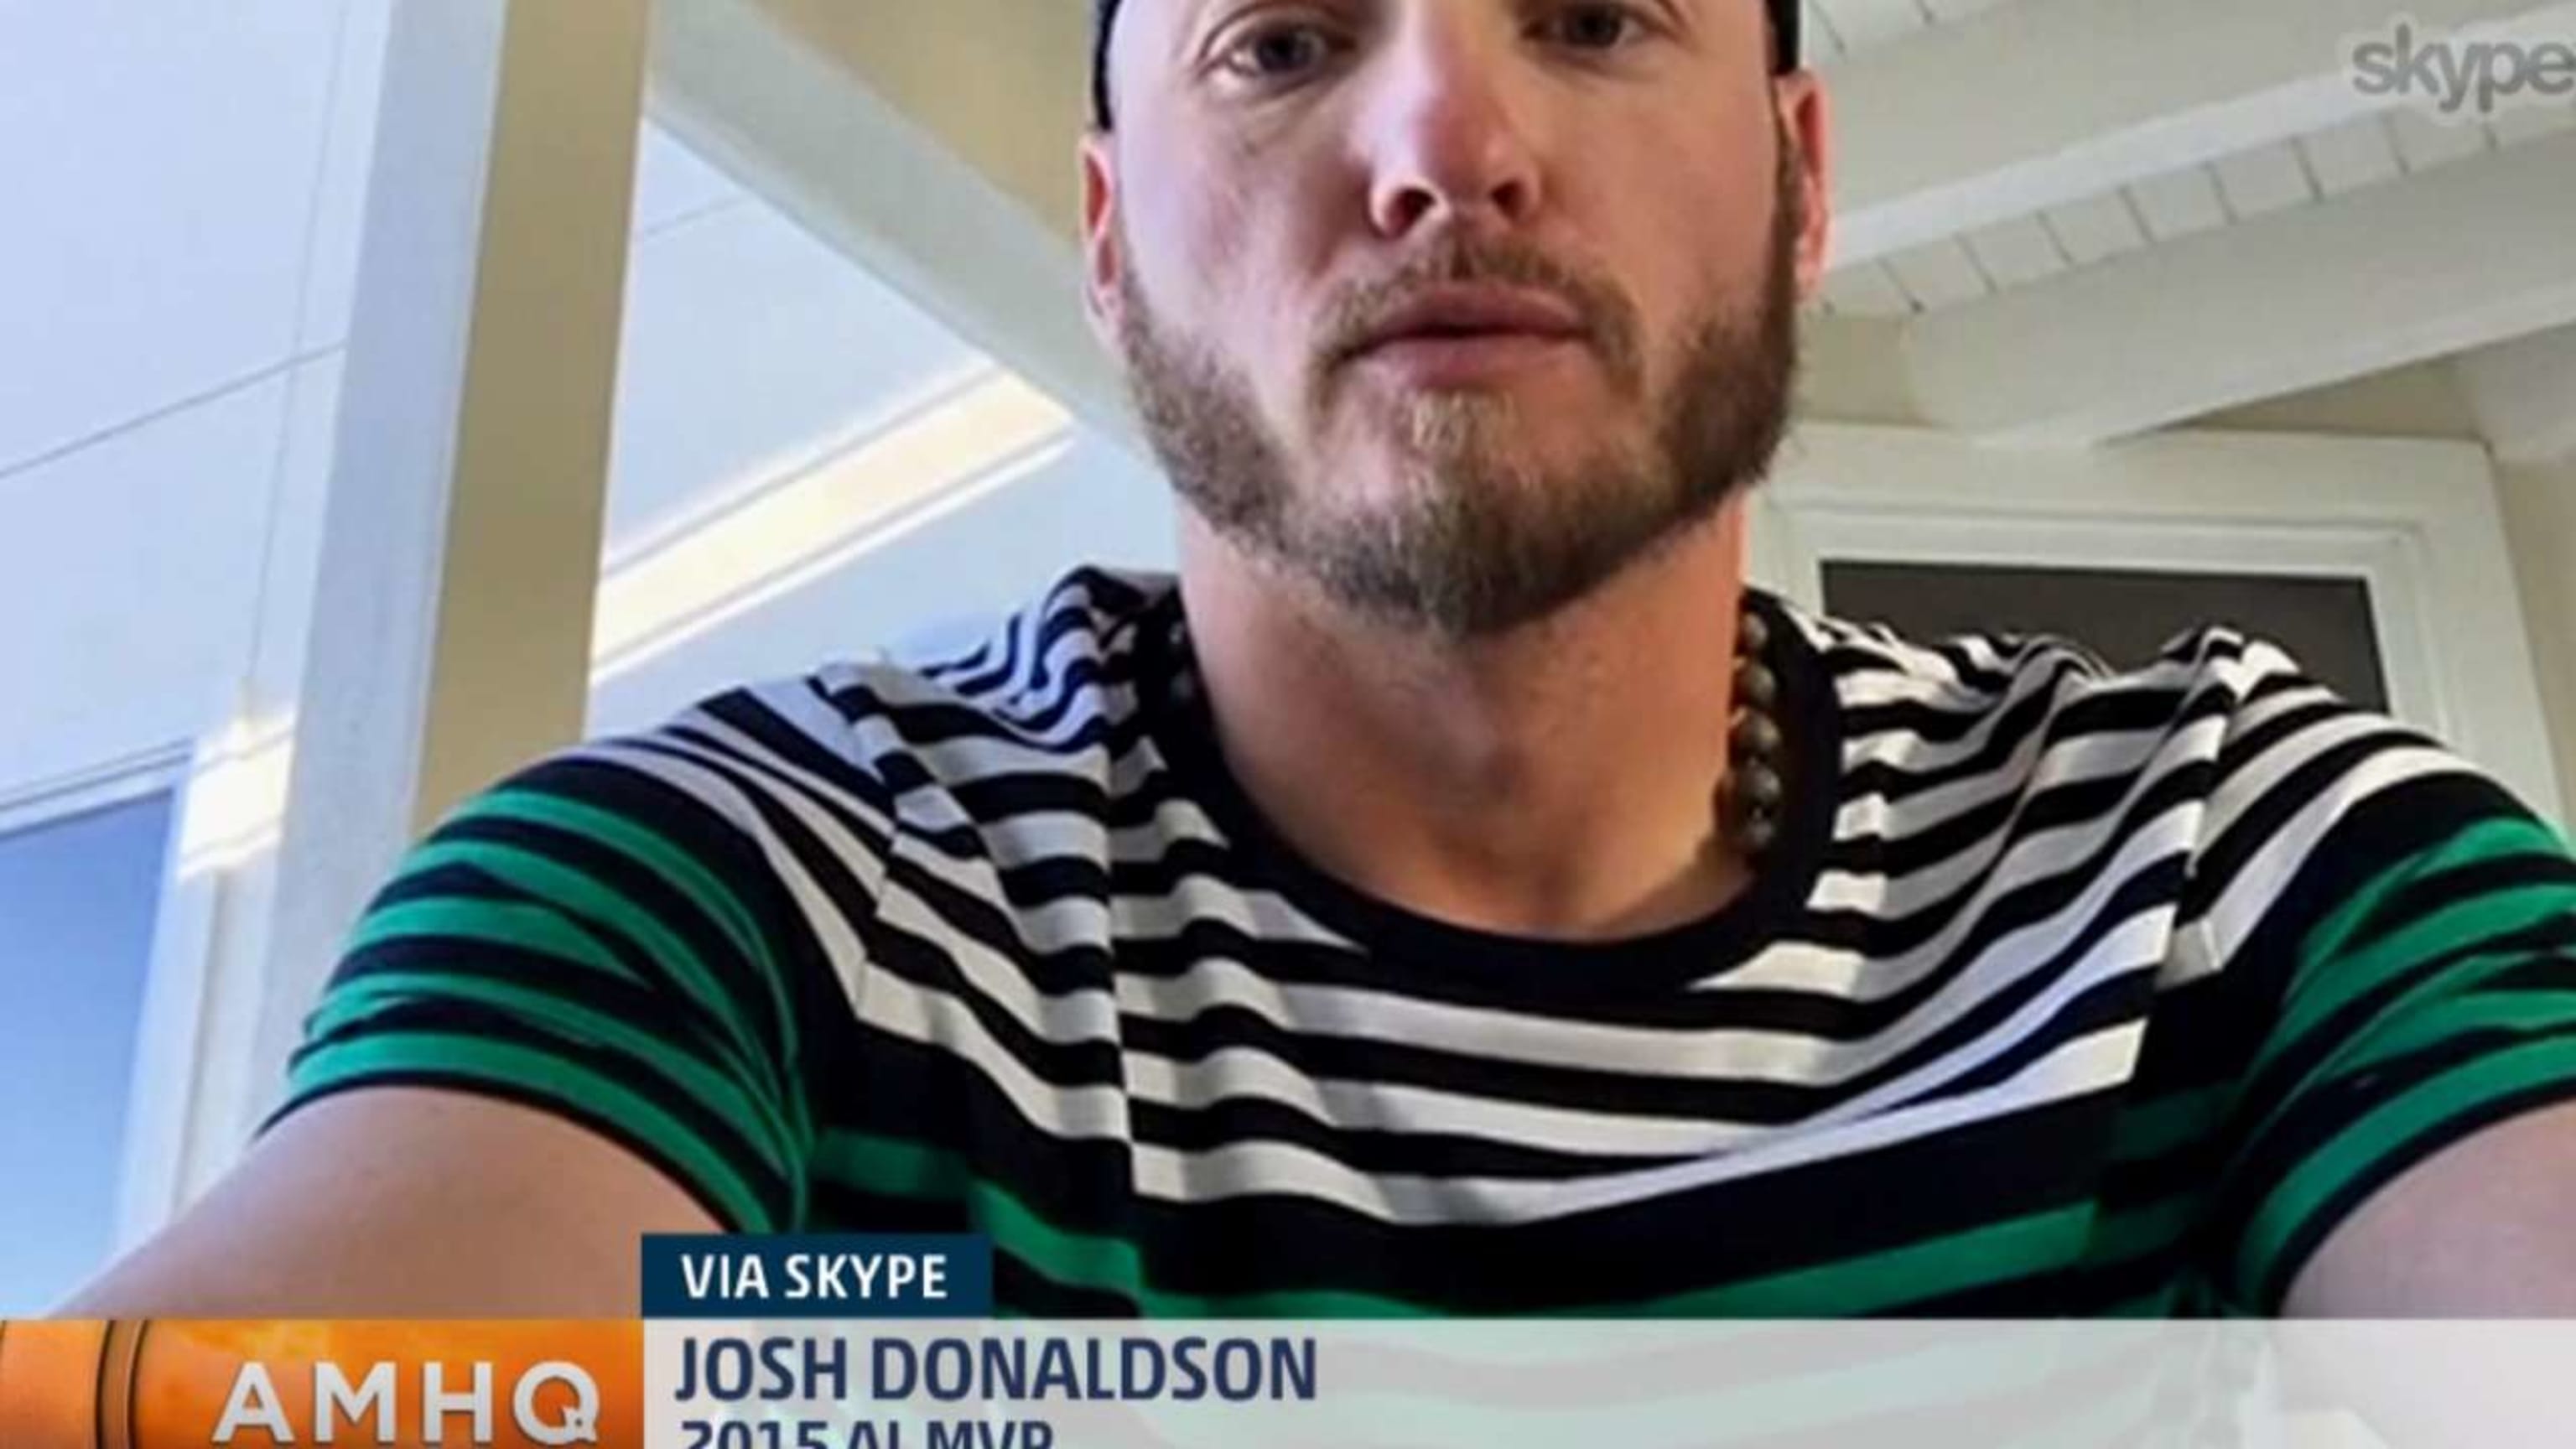 josh donaldson beard